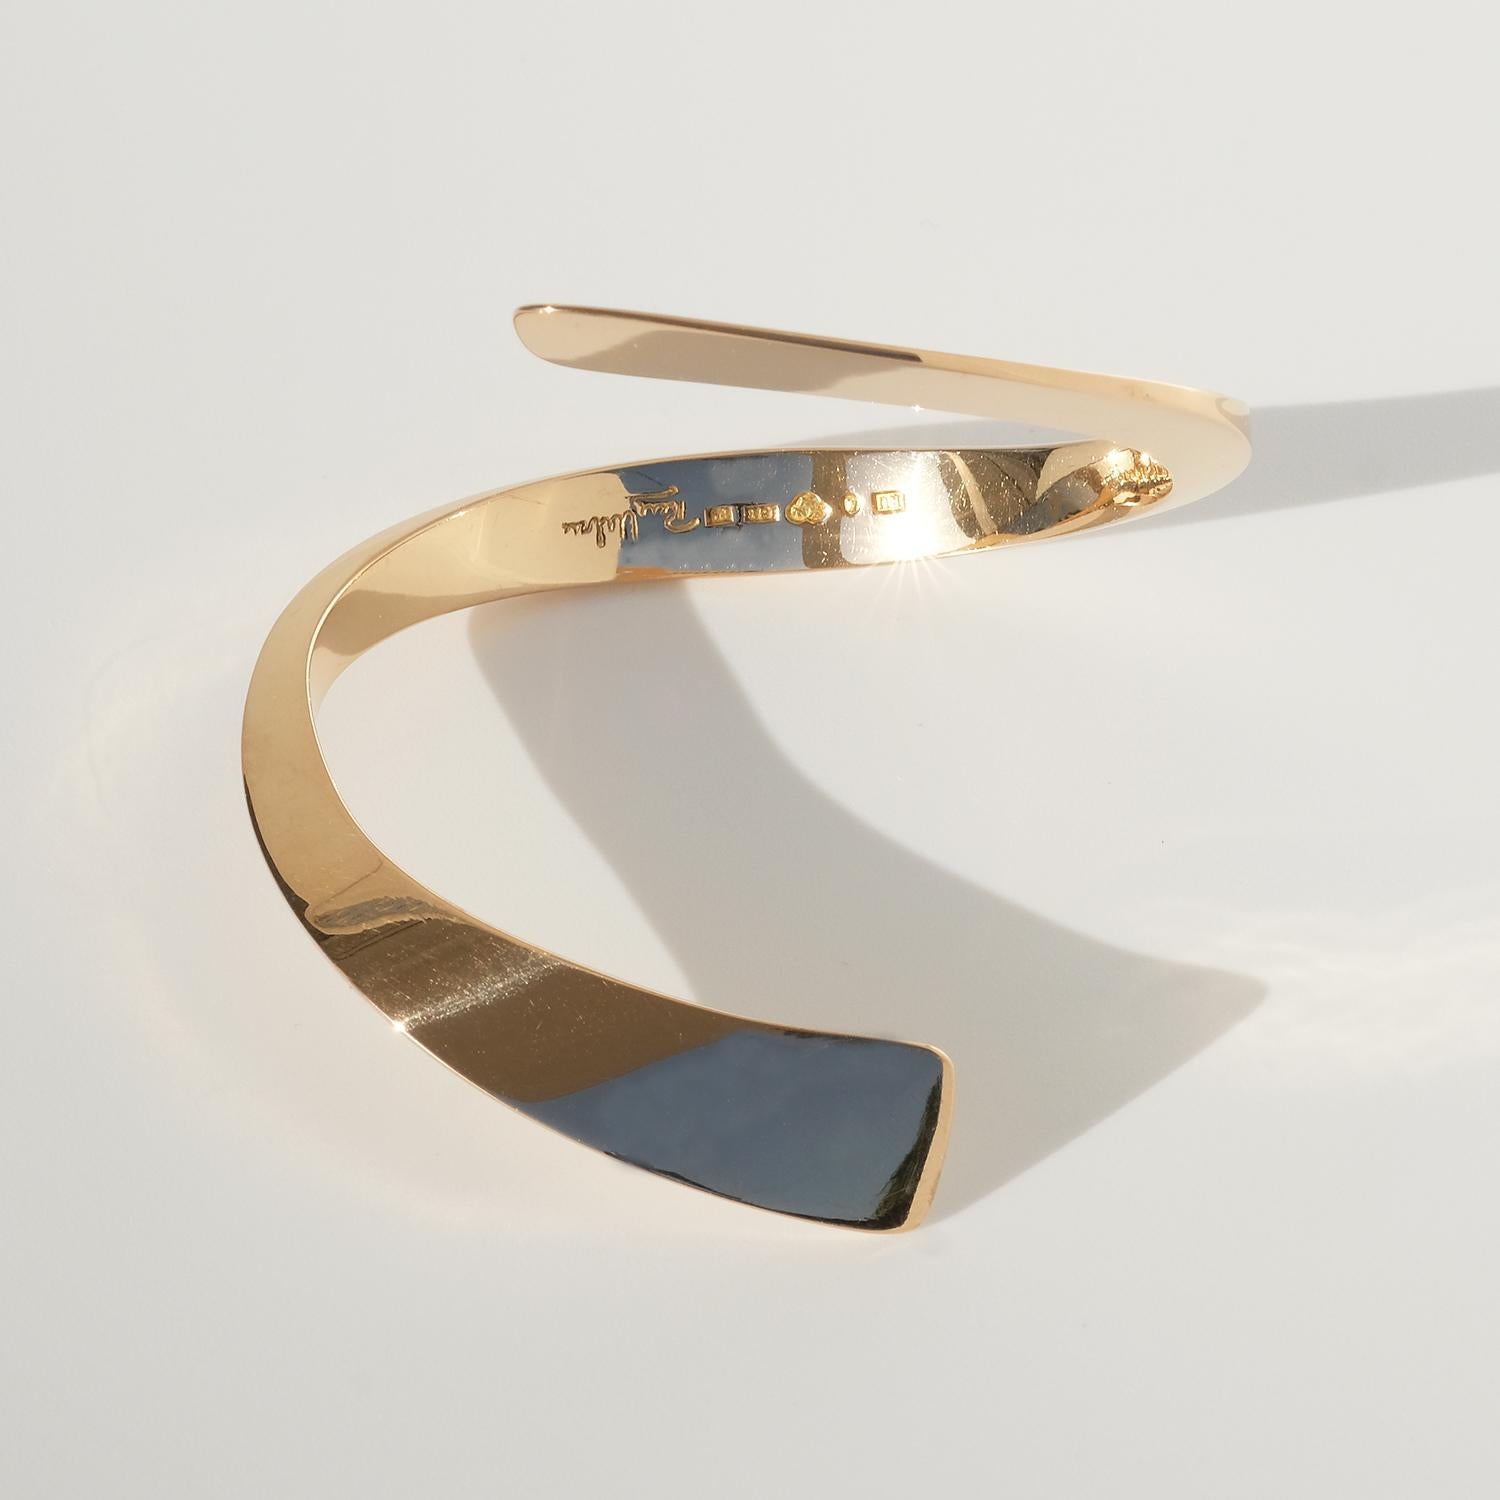 Swedish gold bracelet by Rey Urban made 1965. 9